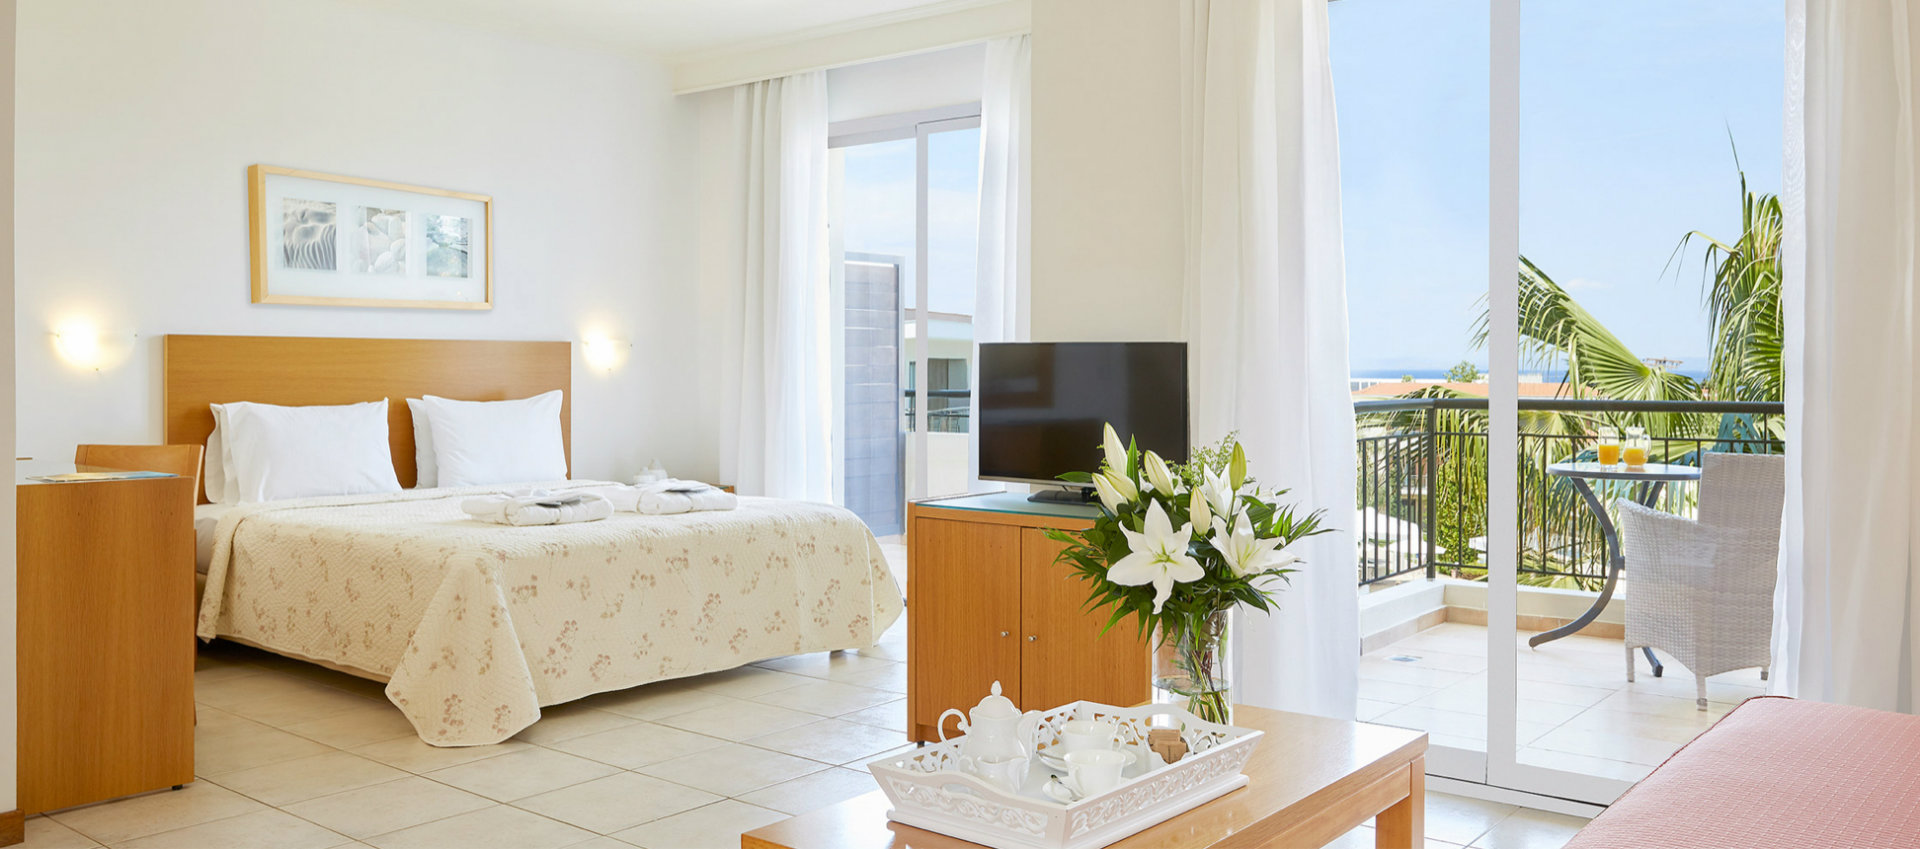 Hotel Renaissance Haniotu Resort-Junior suite.jpg